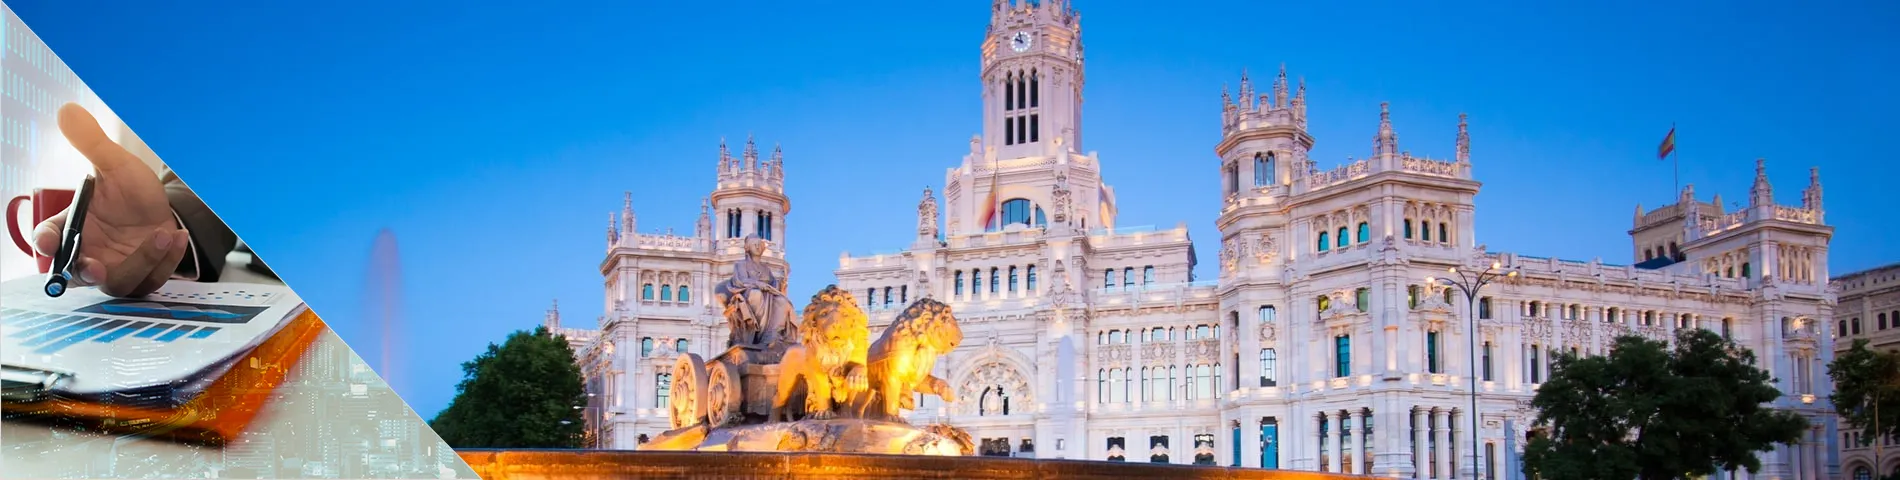 Madryt - Bankowość i Finanse